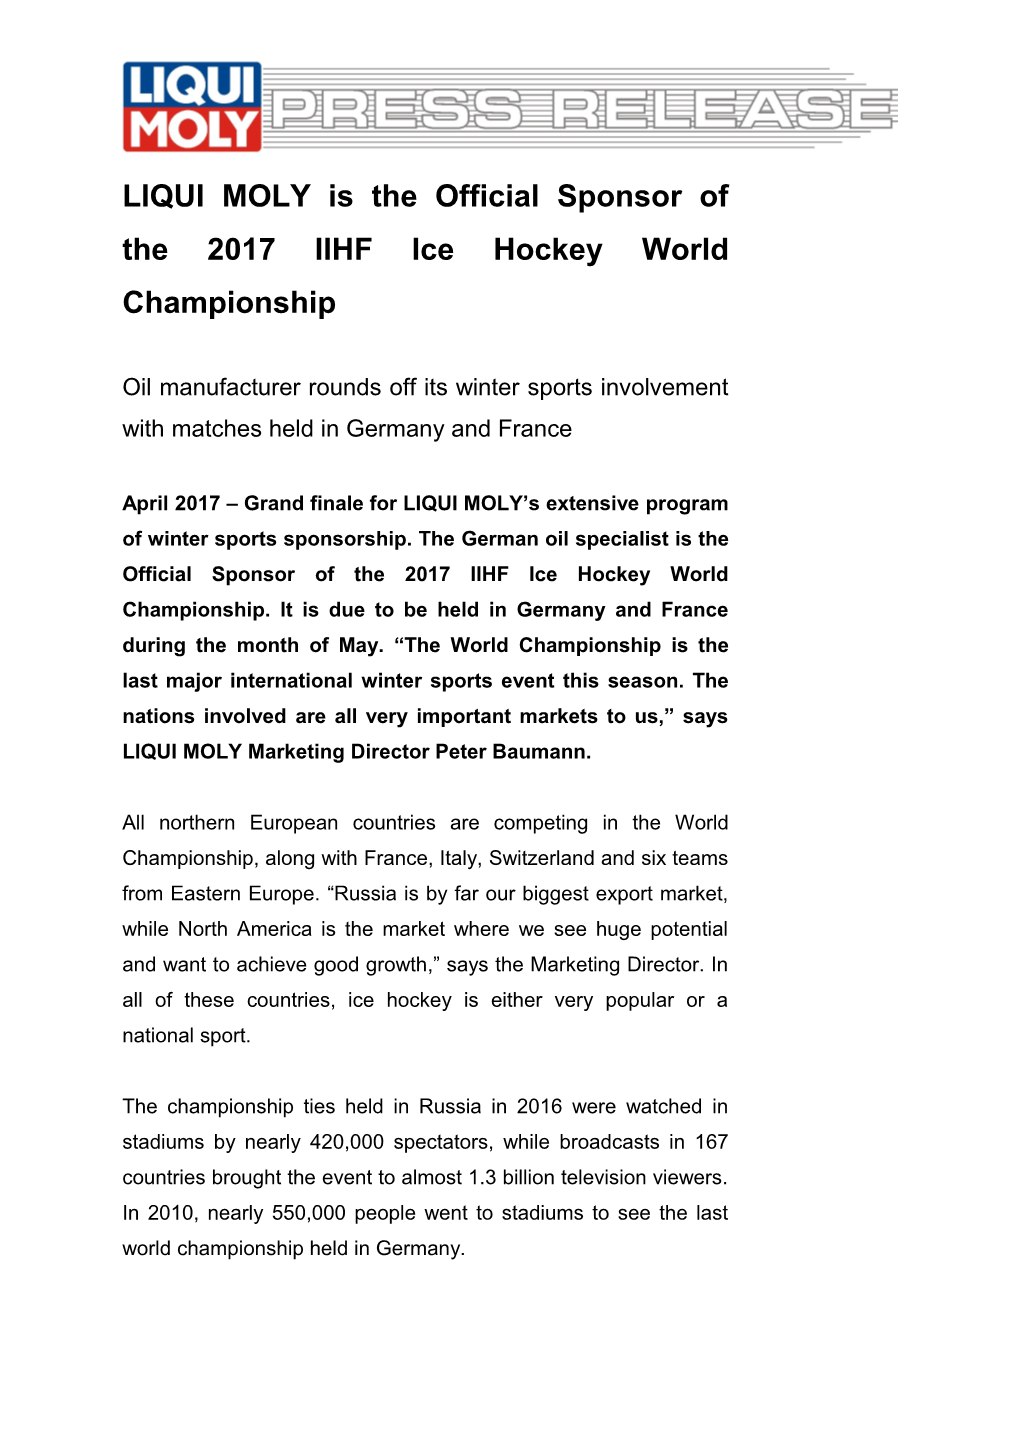 LIQUI MOLY Isthe Official Sponsor Ofthe 2017 IIHF Ice Hockey World Championship